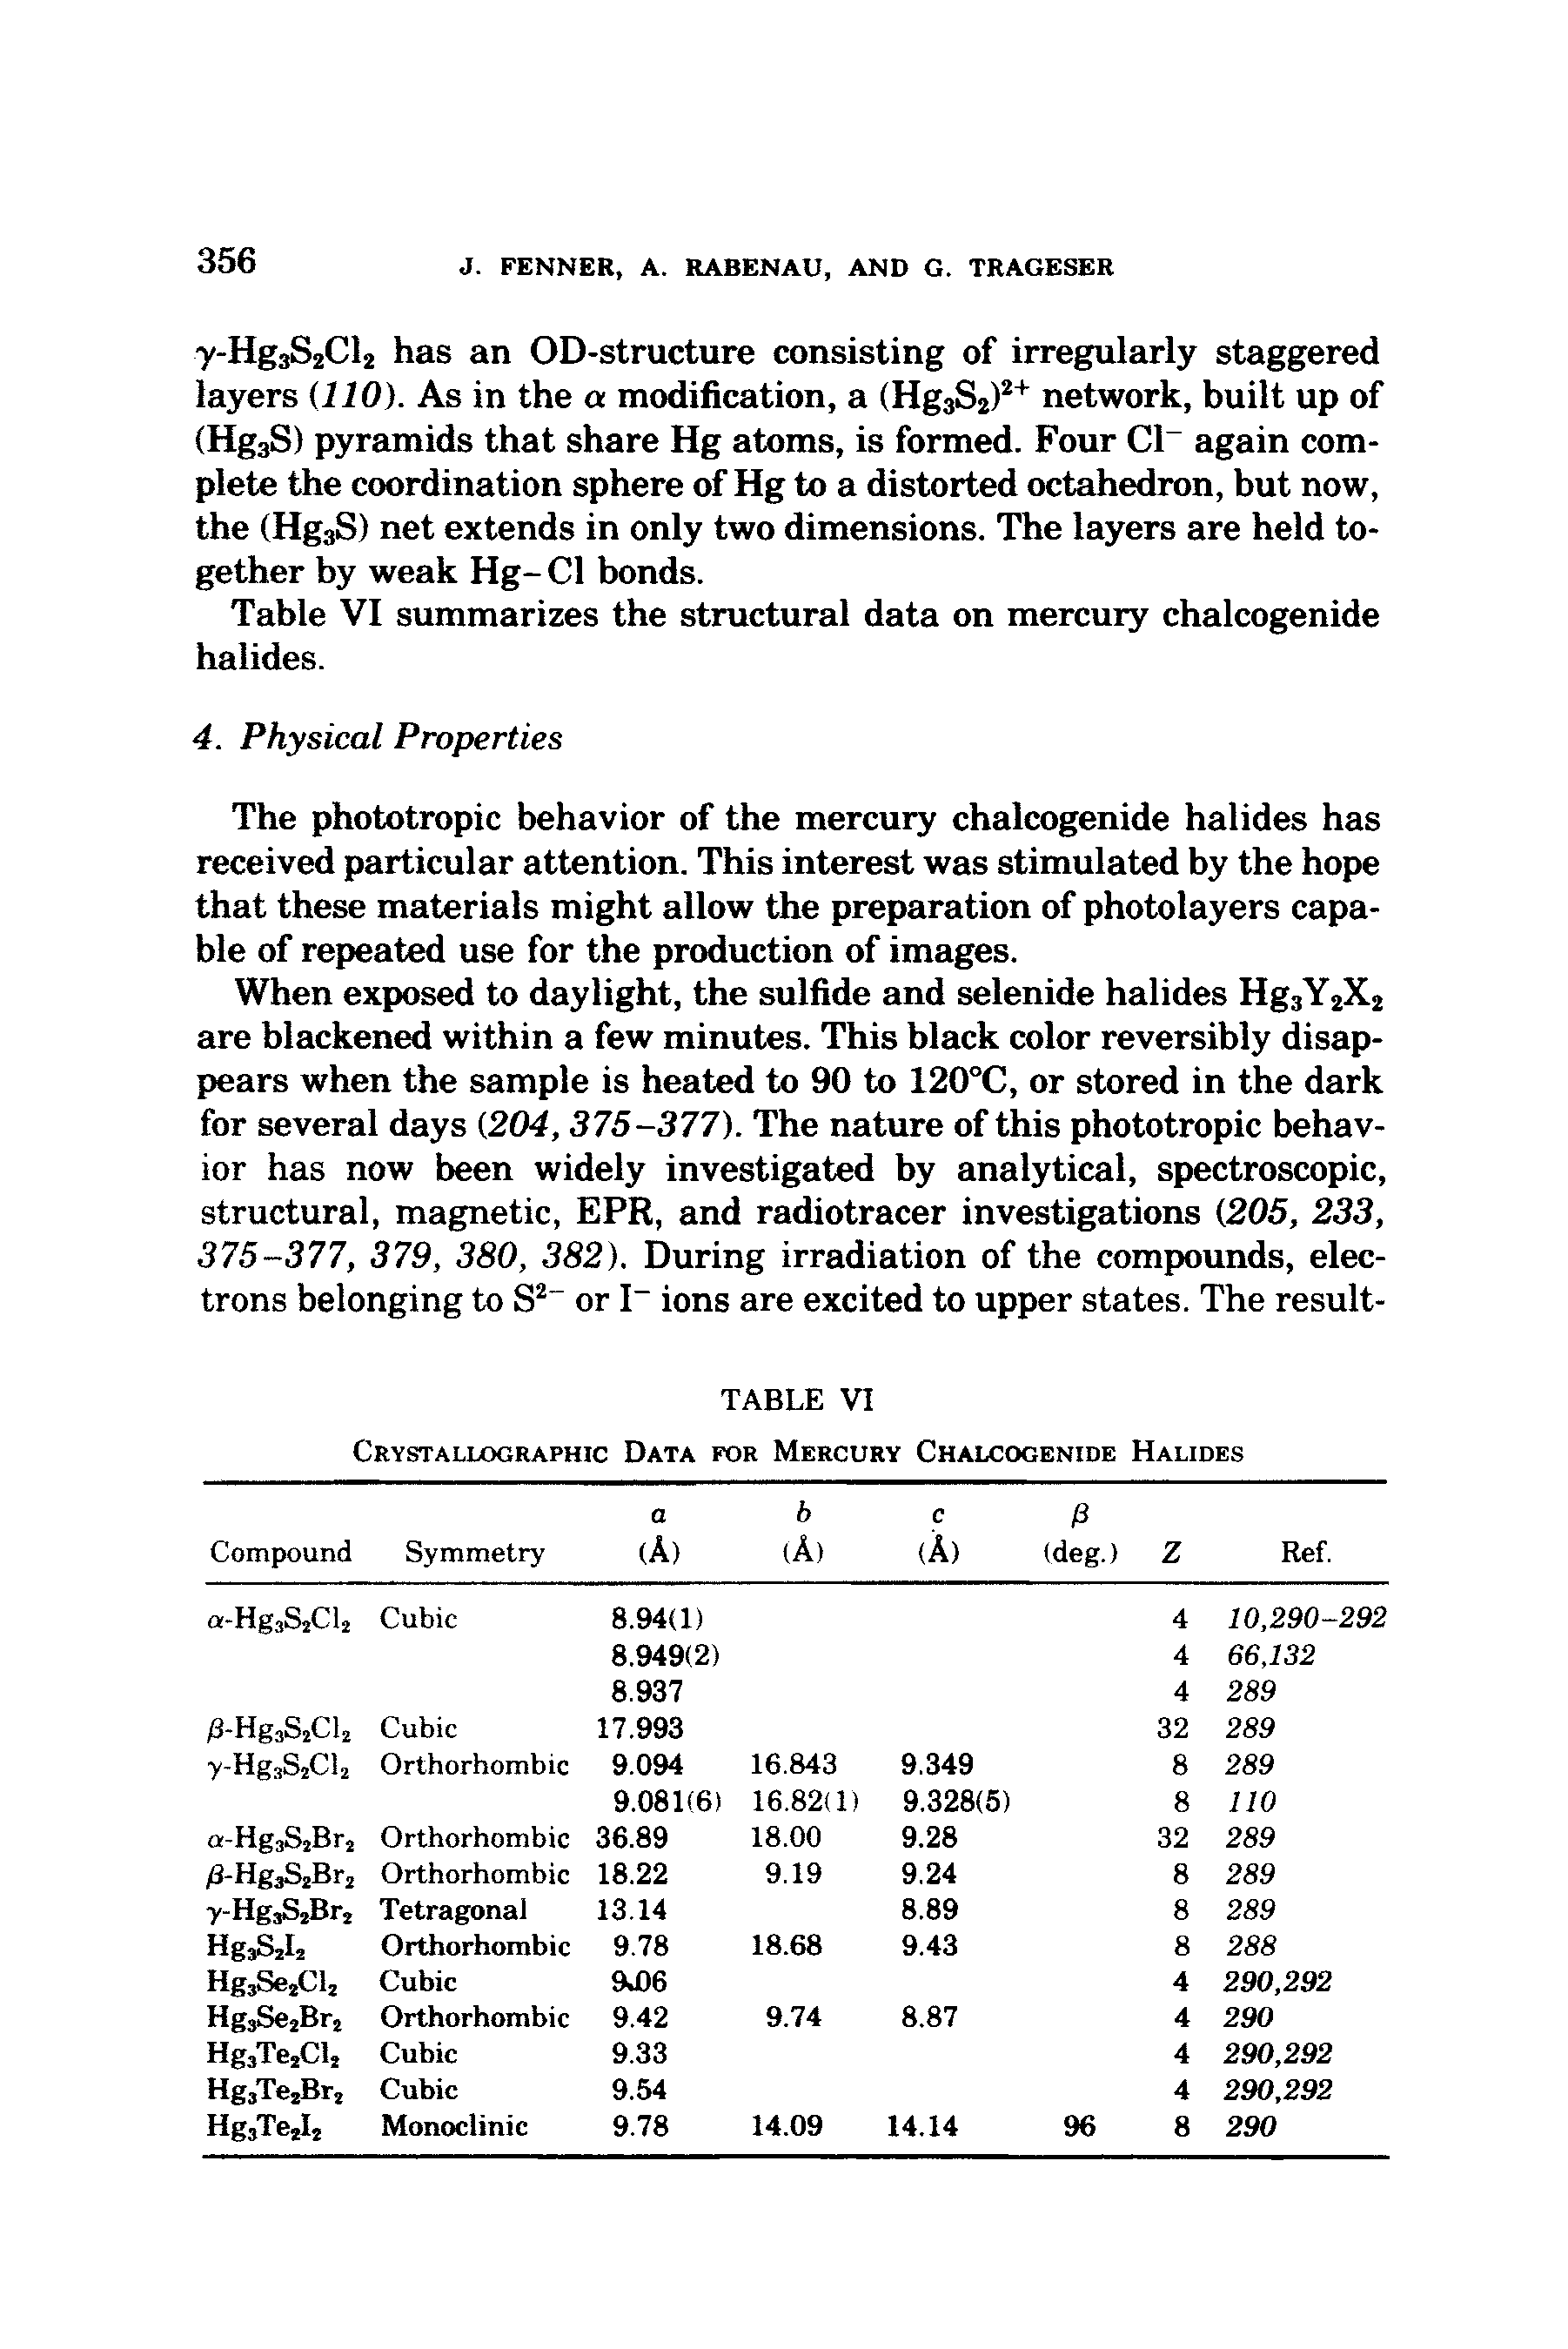 Table VI summarizes the structural data on mercury chalcogenide halides.